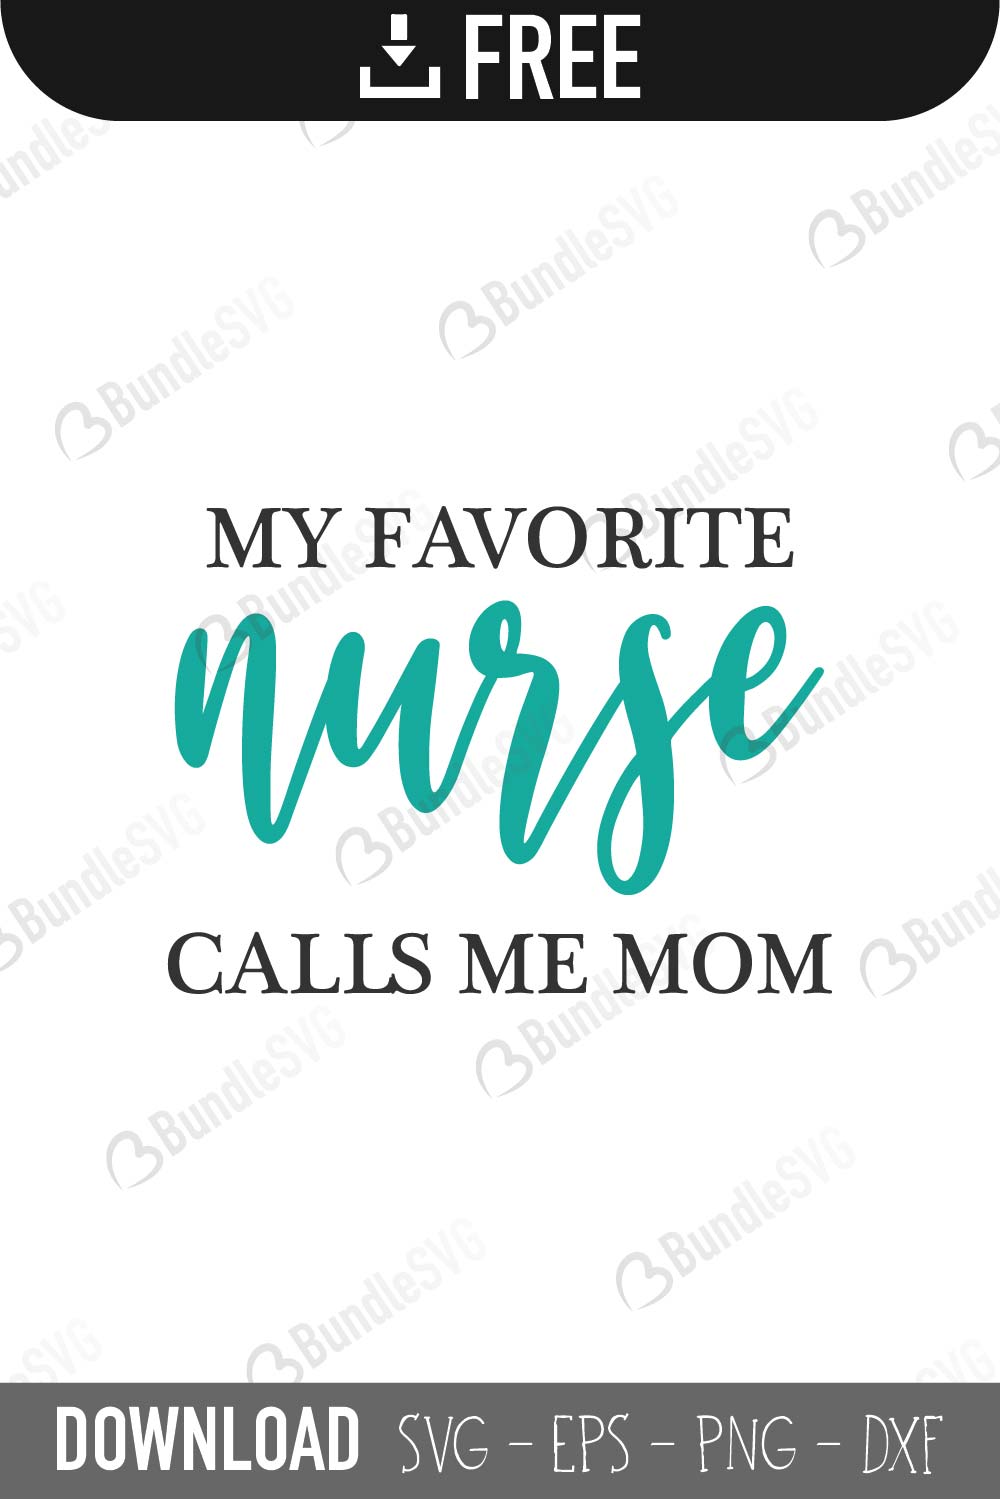 Download My Favorite Nurse Calls Me Mom Svg Cut Files Free Download Bundlesvg